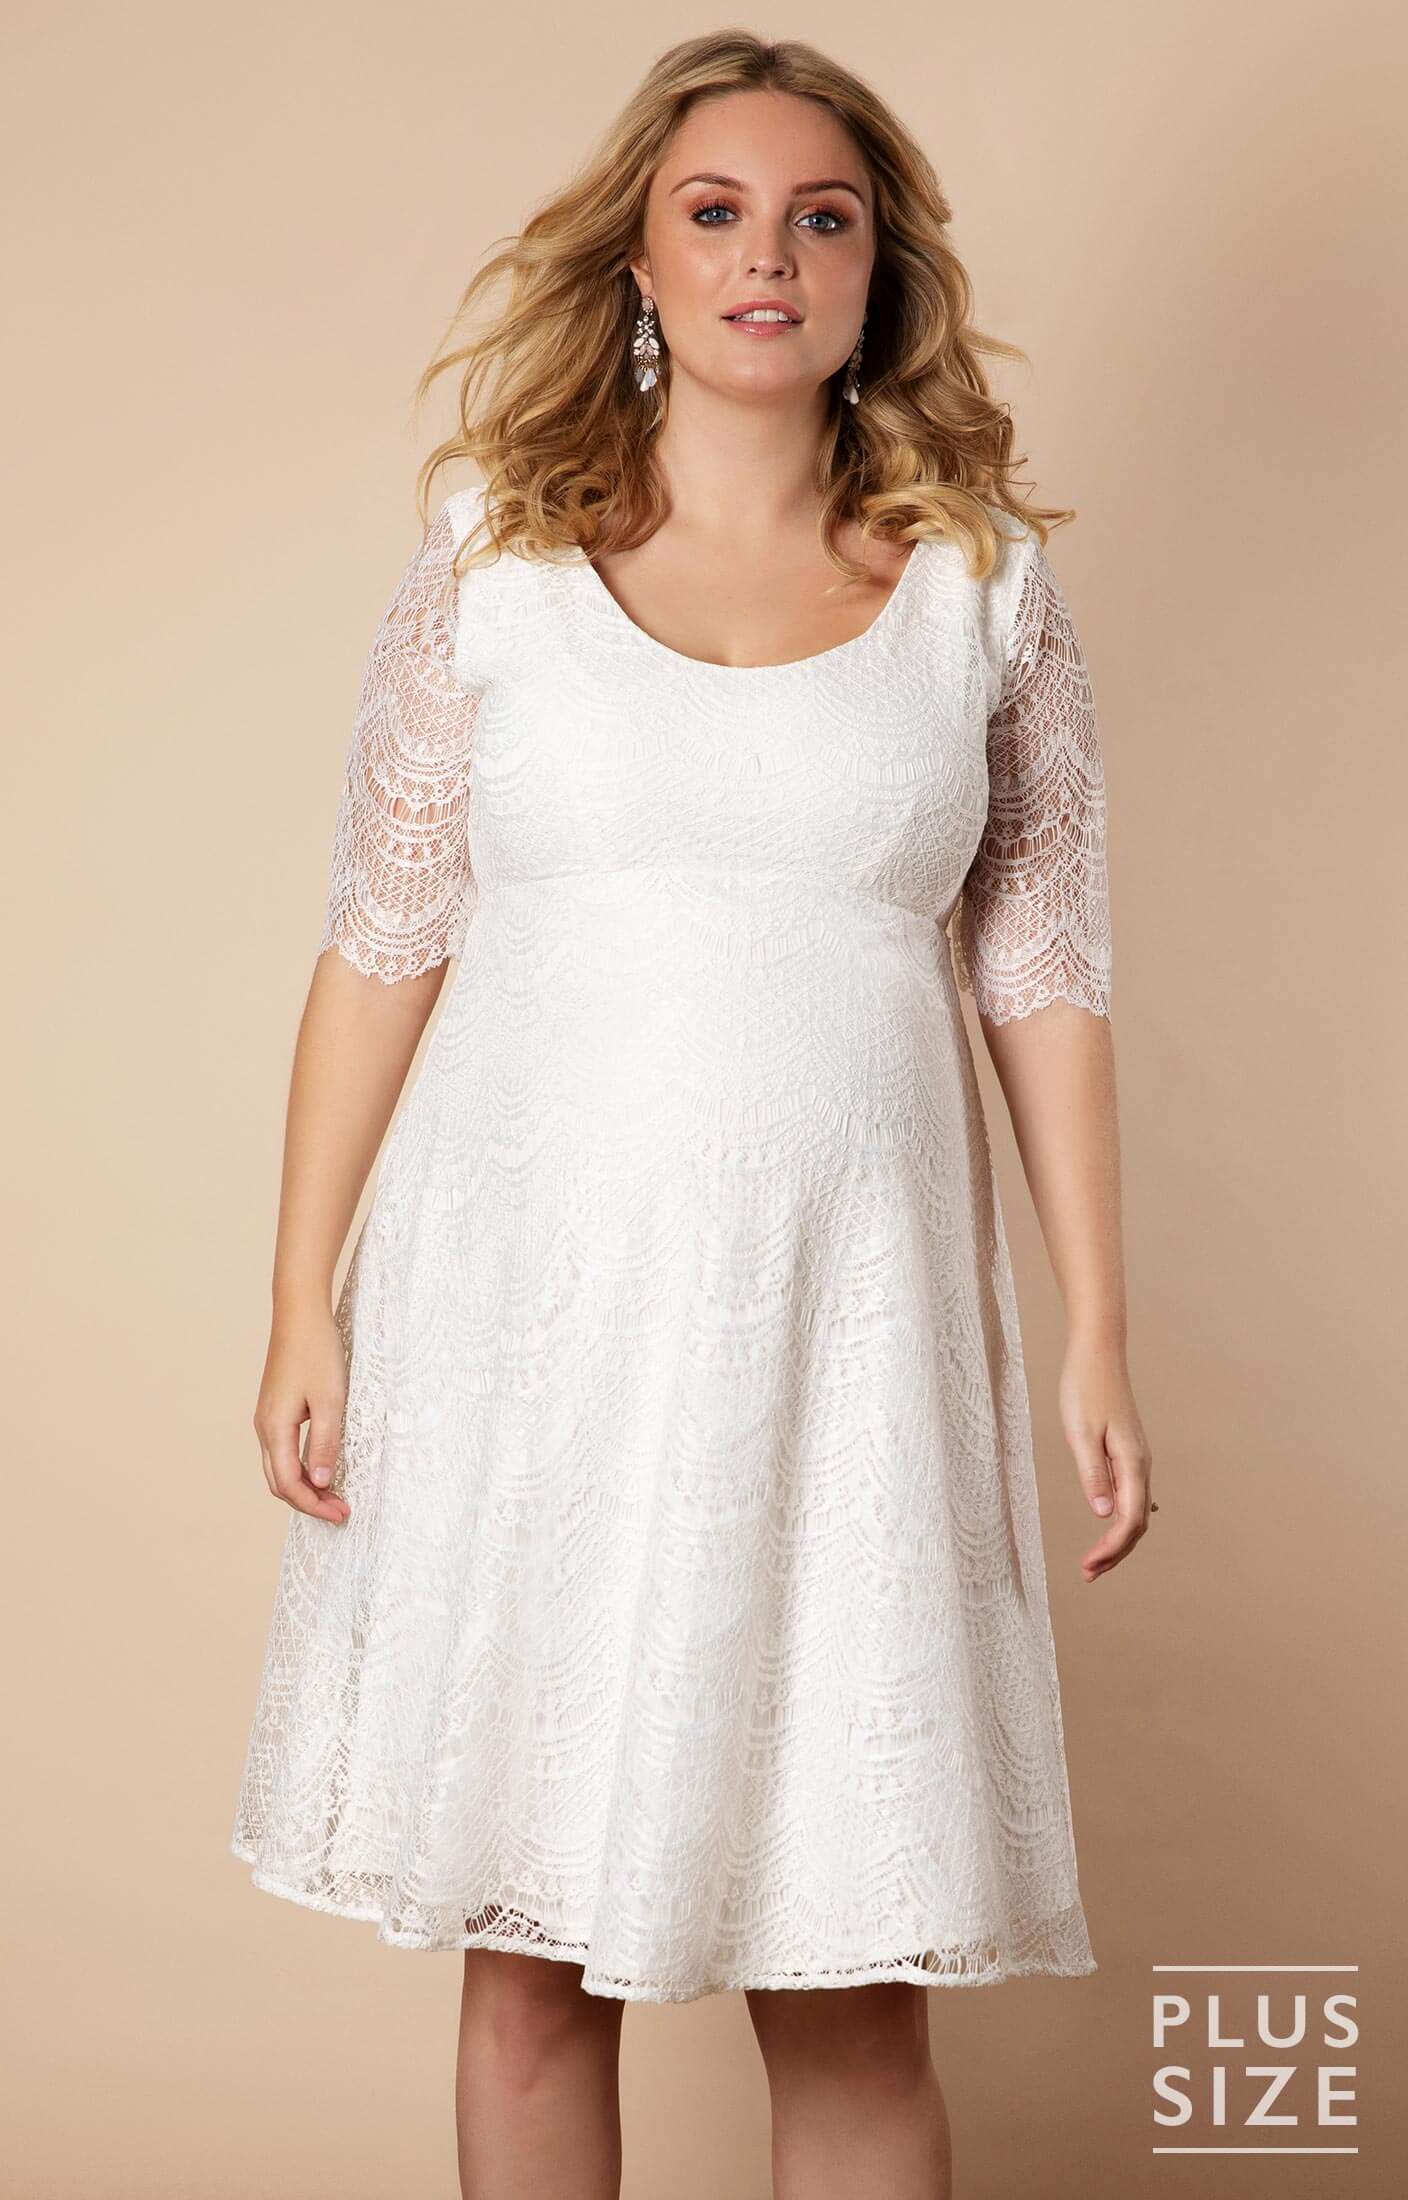 Verona Maternity Wedding Dress Short Ivory White - Maternity Wedding Dresses,  Evening Wear and Party Clothes by Tiffany Rose ES